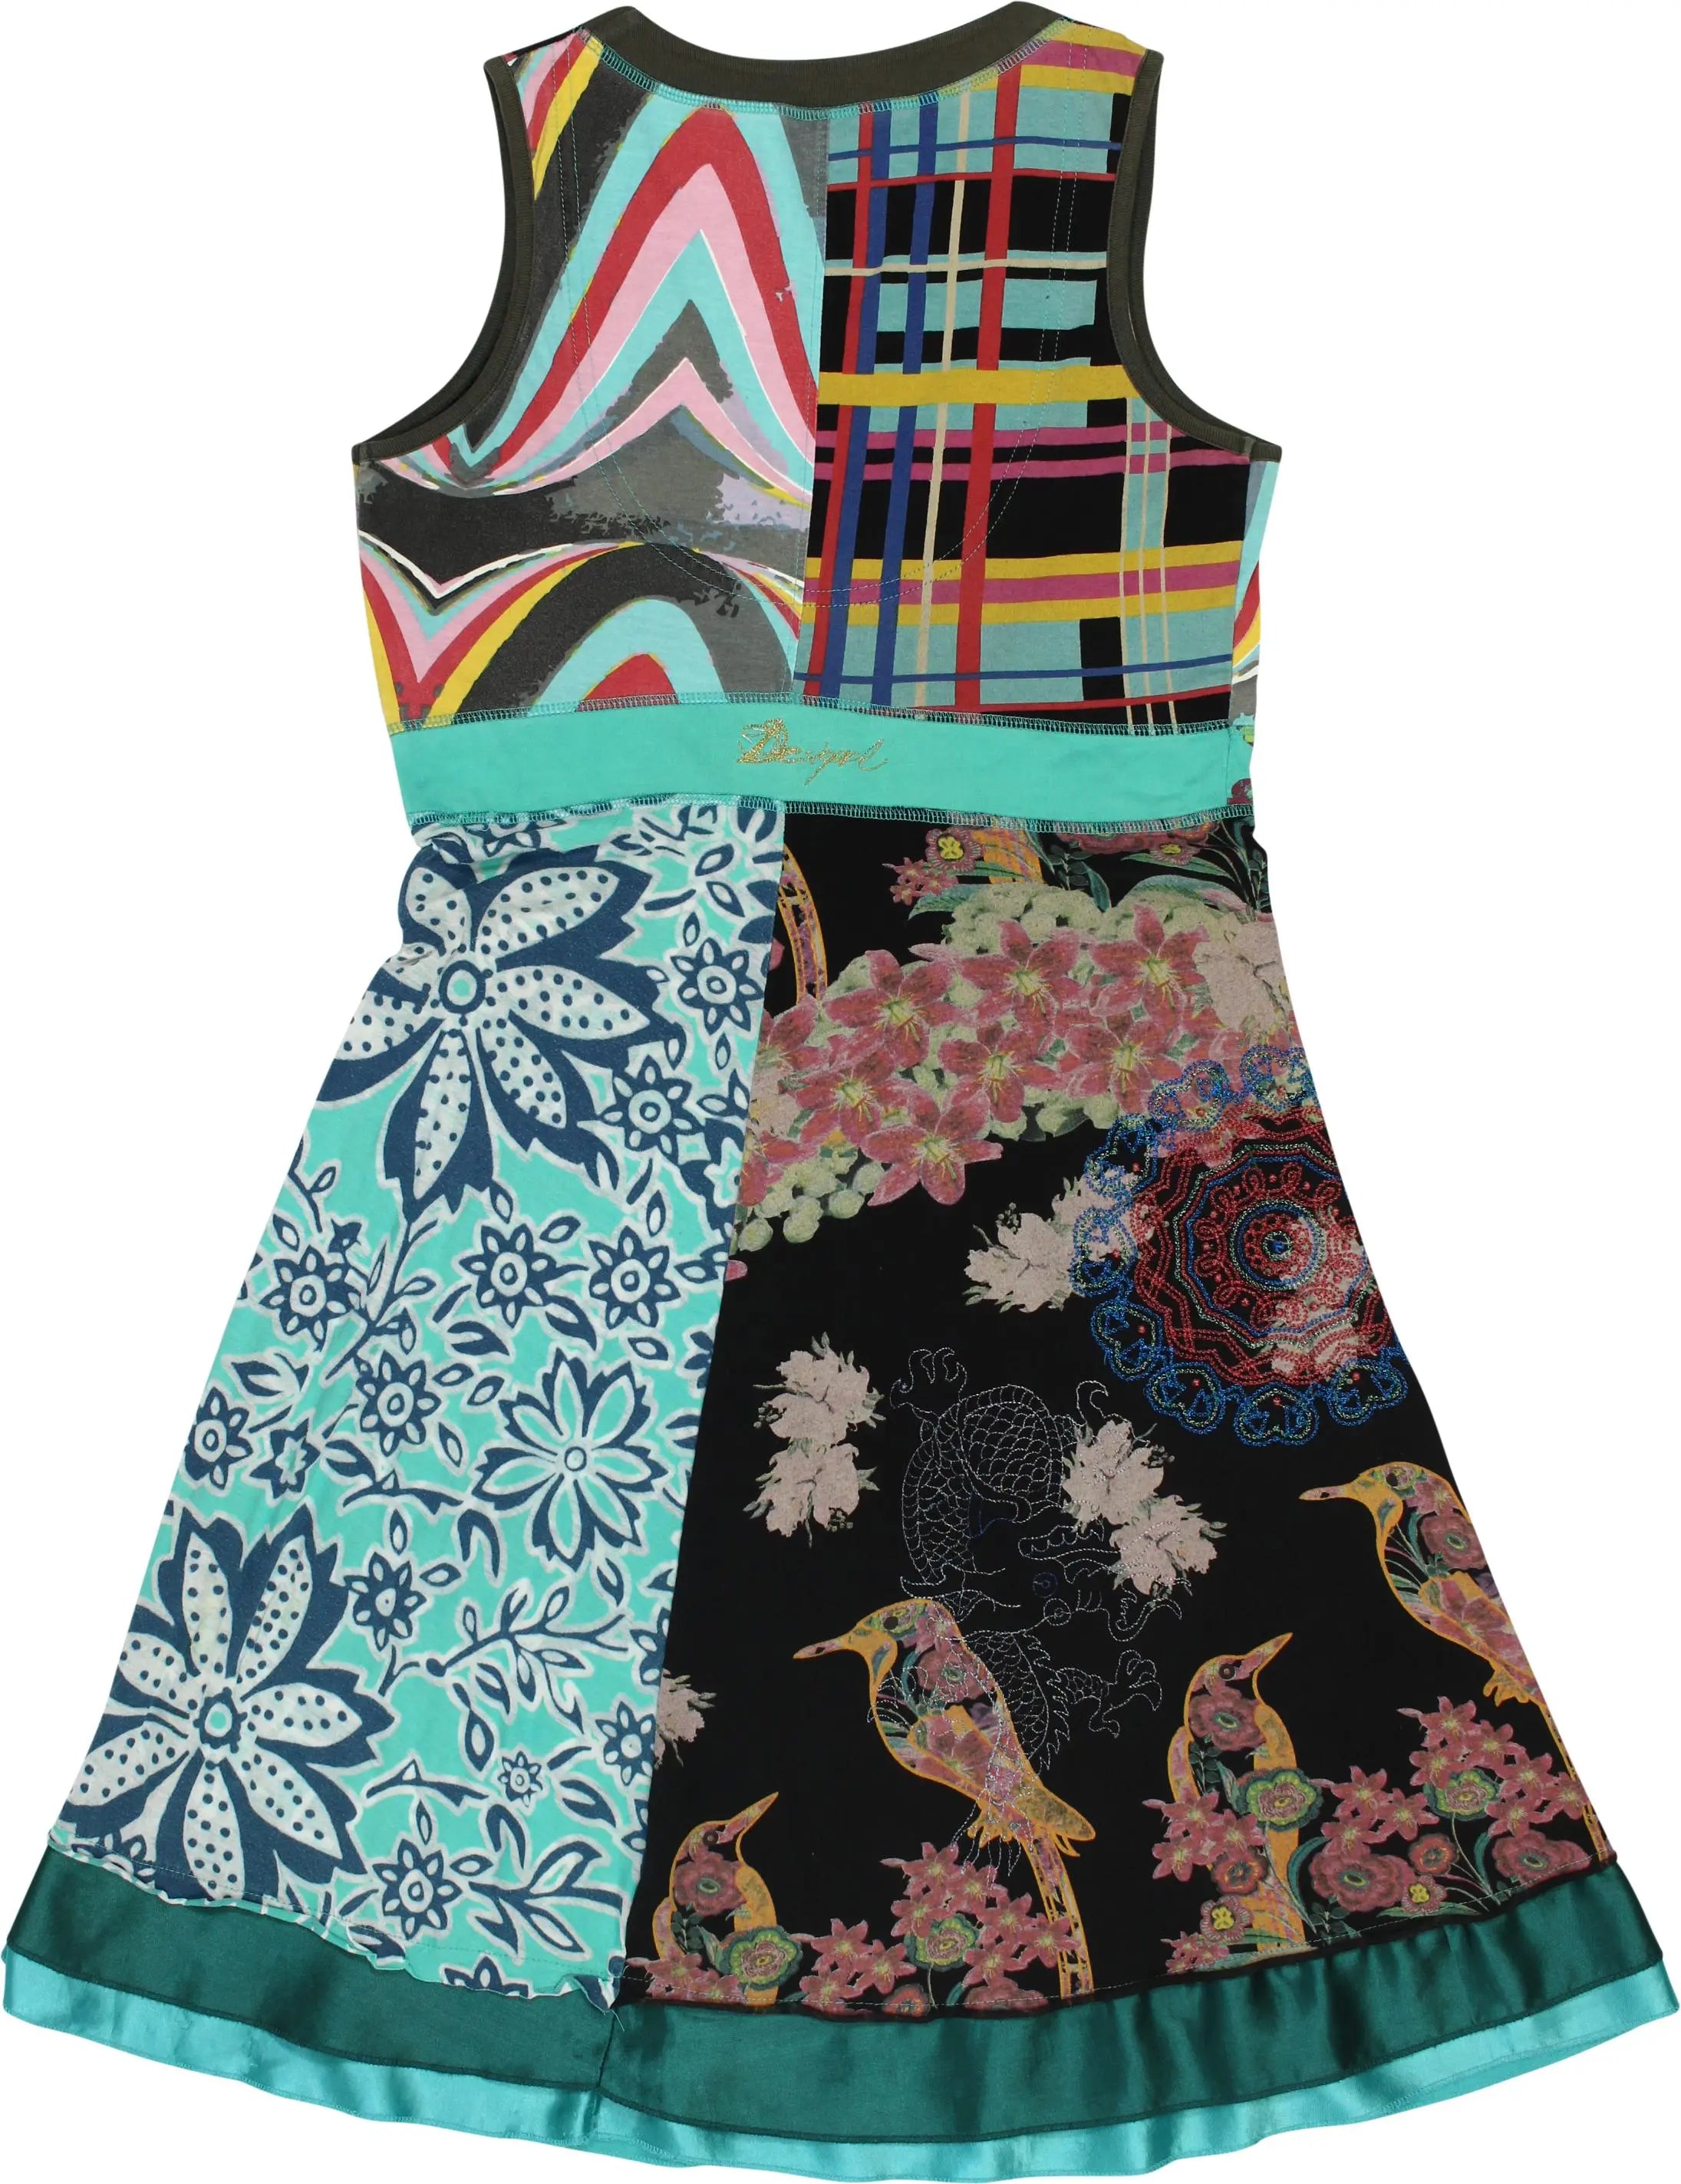 Desigual - Desigual Dress- ThriftTale.com - Vintage and second handclothing